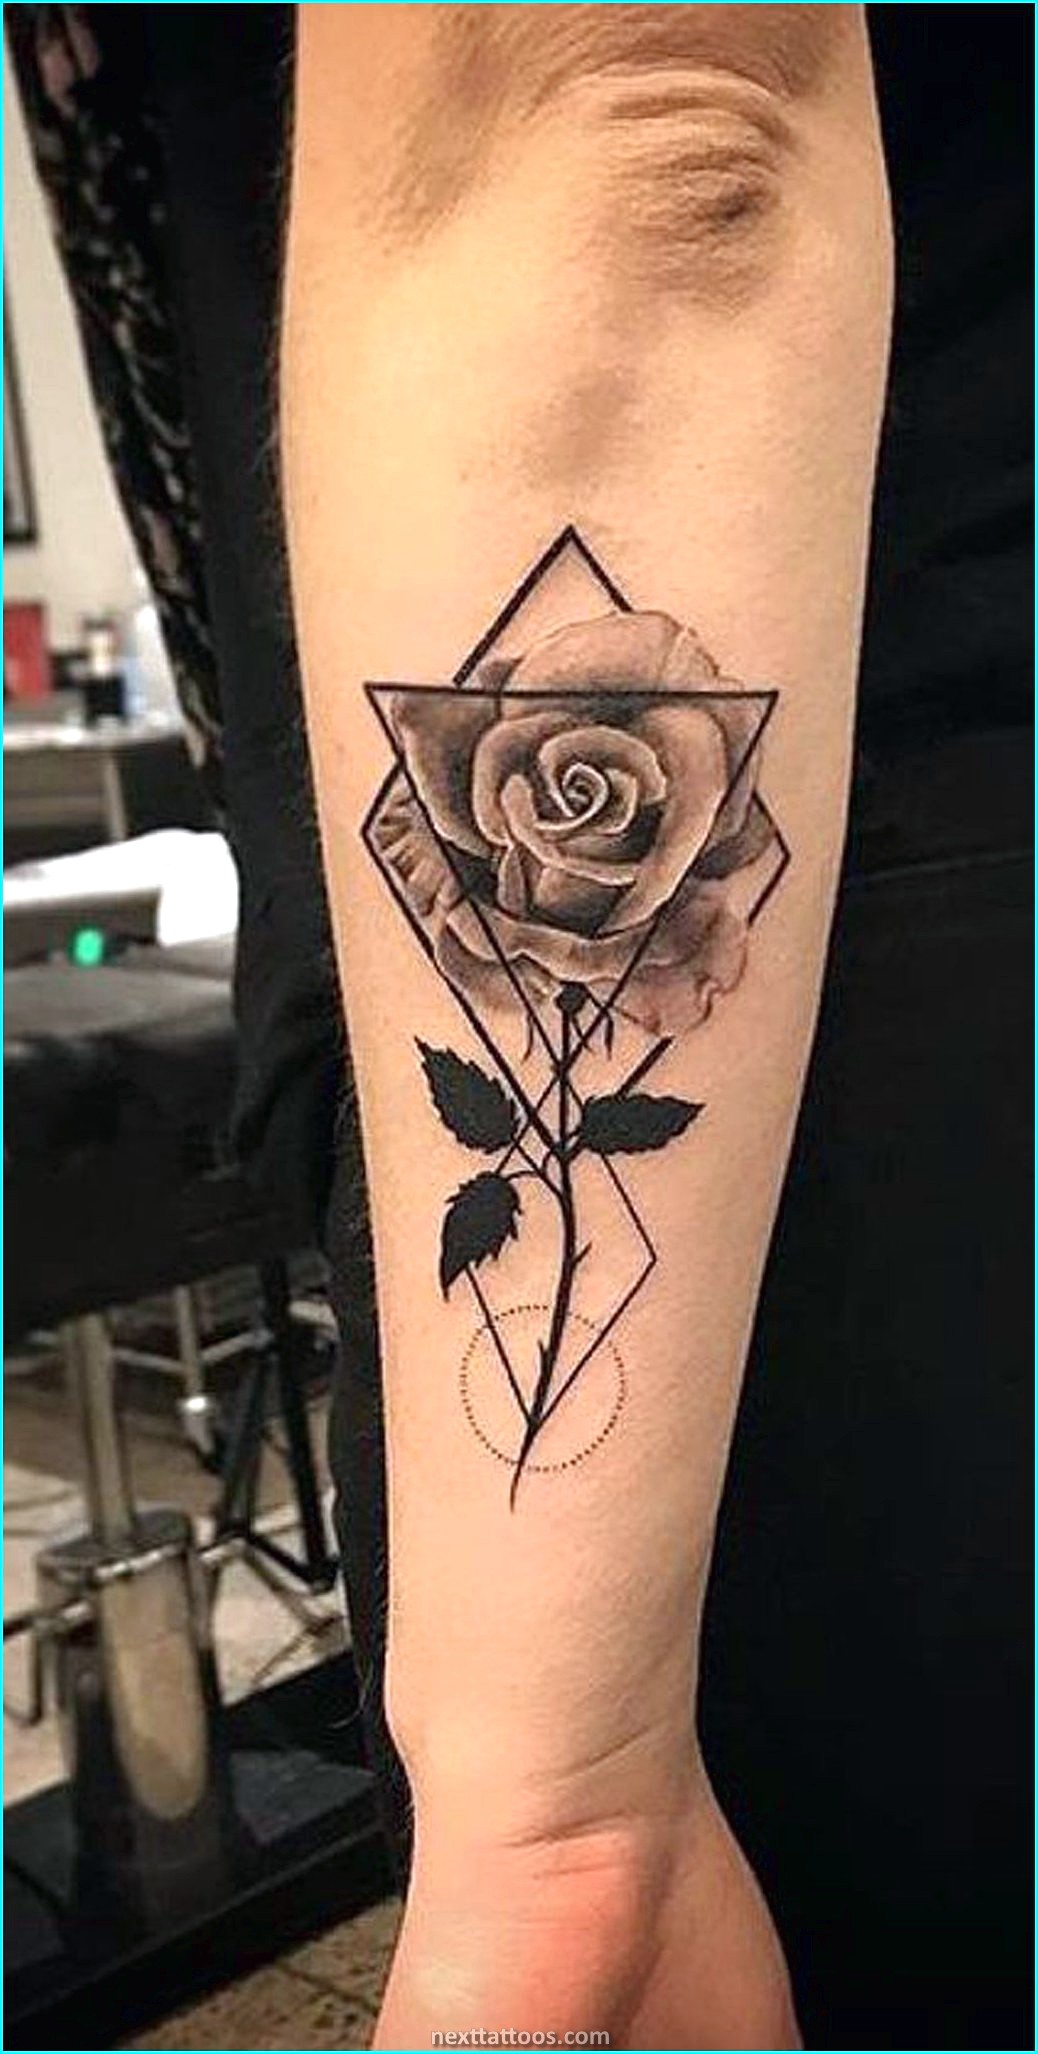 Women's Rose Tattoos on Arm